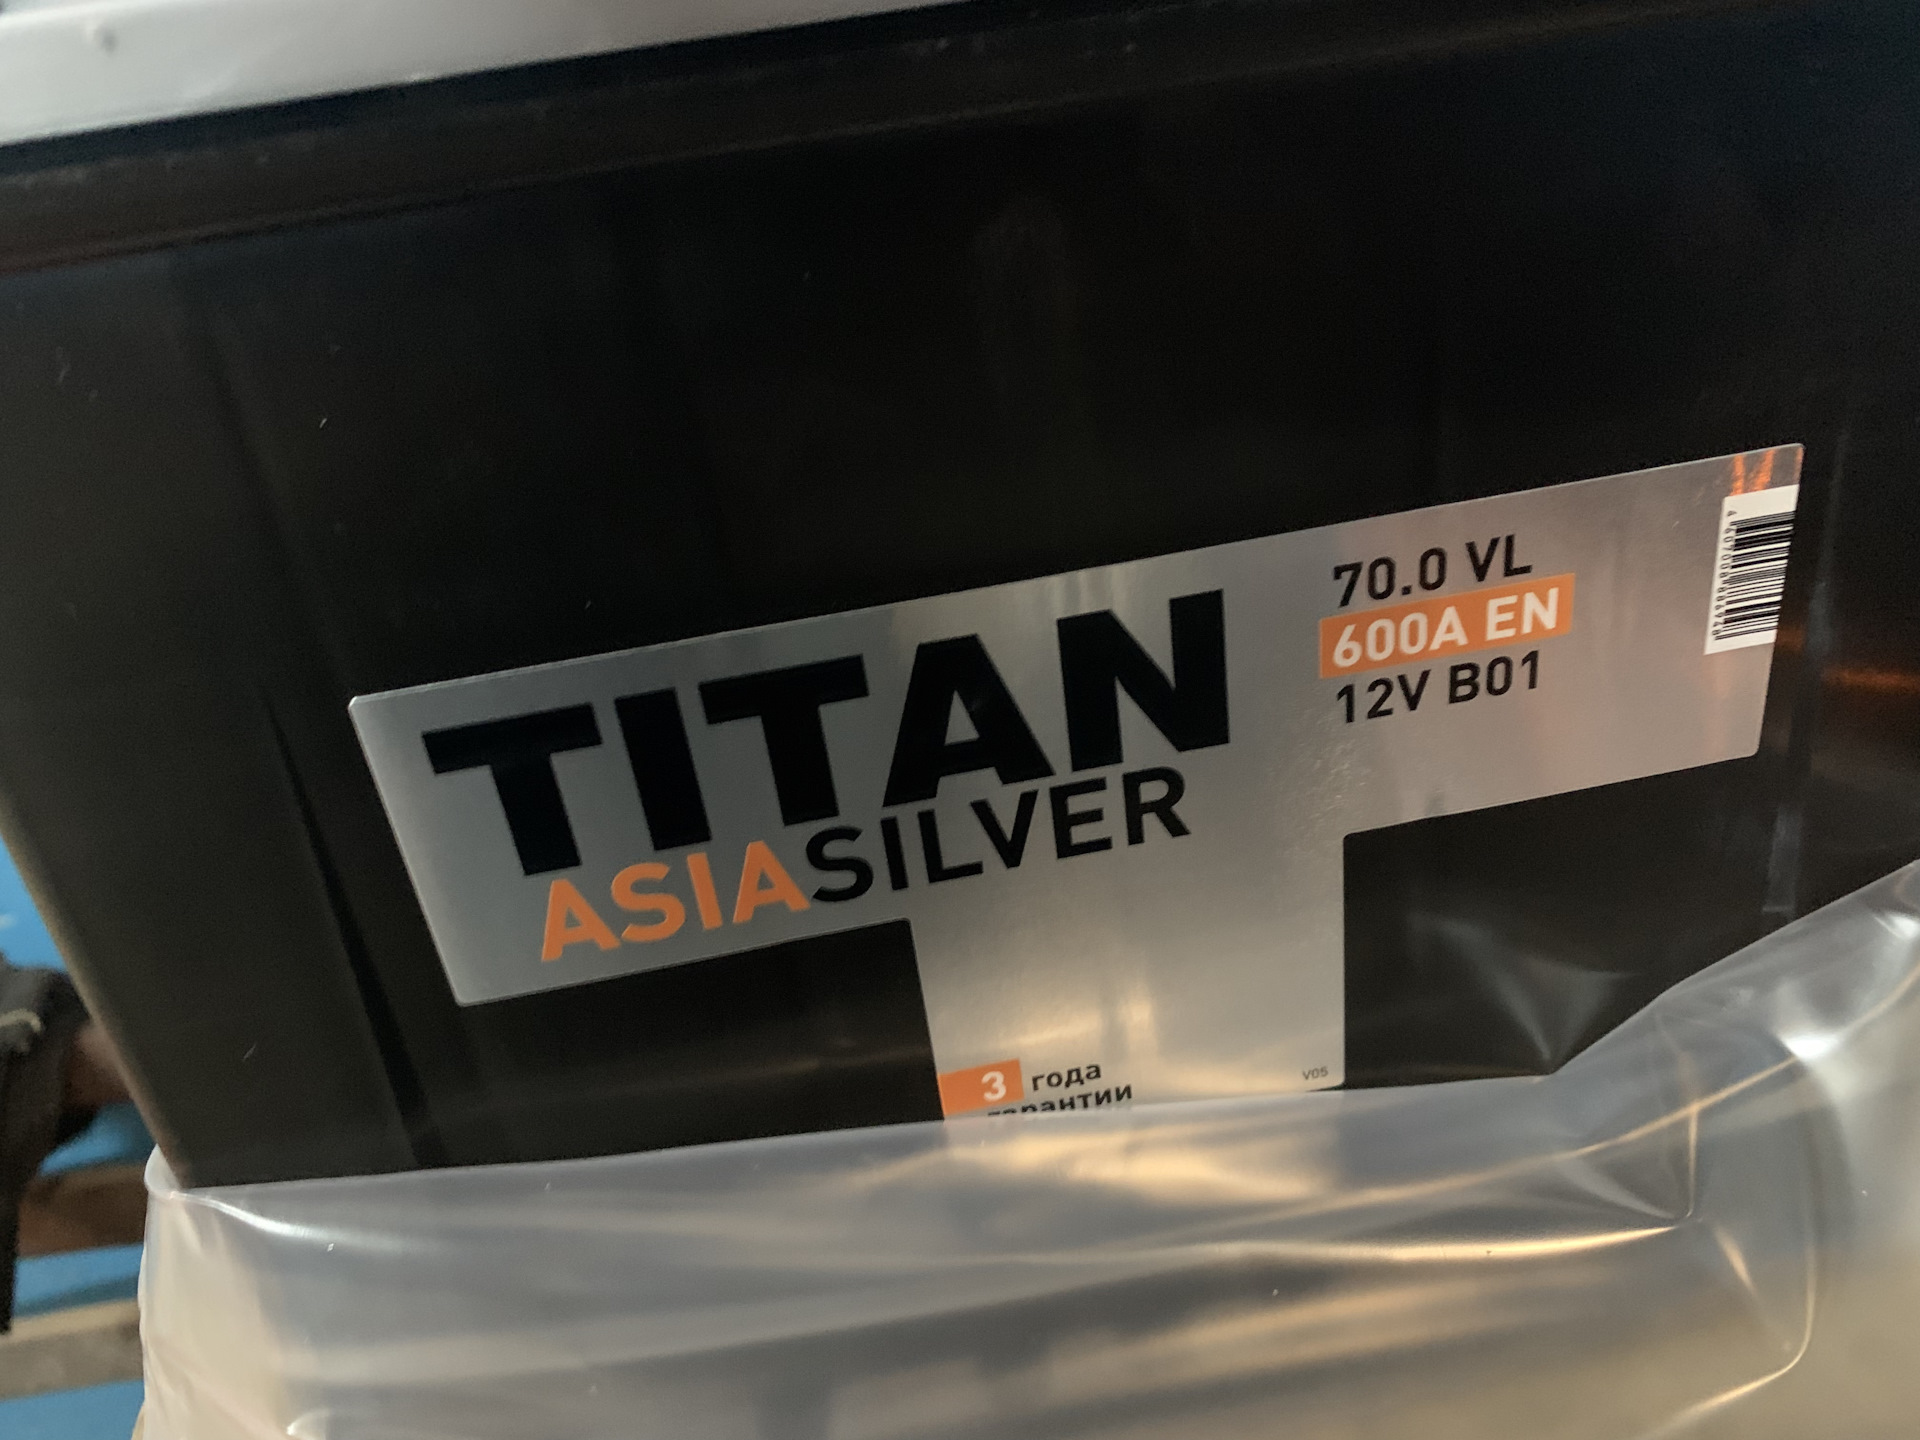 Дата аккумулятора титан. Аккумулятор Титан Сильвер 70ah. Titan Asia Silver 70ah. Титан Азия Сильвер 70. Titan Asia Silver 70ah 600a.